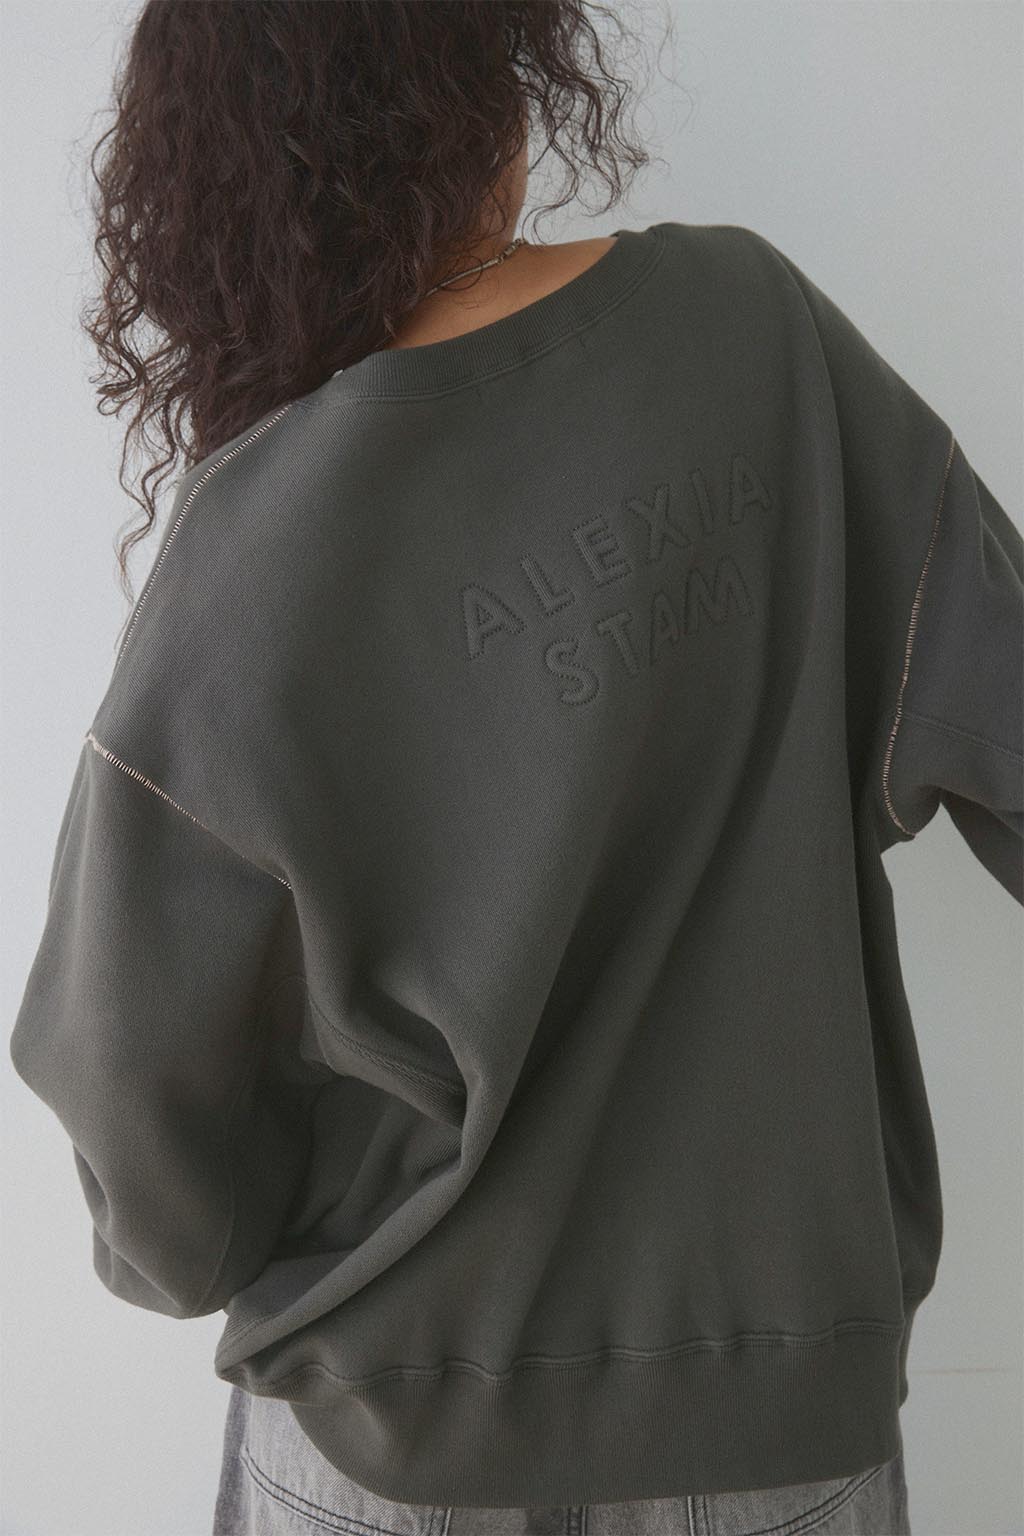 ALEXIASTAM  Back Logo Sweat Shirt 新品